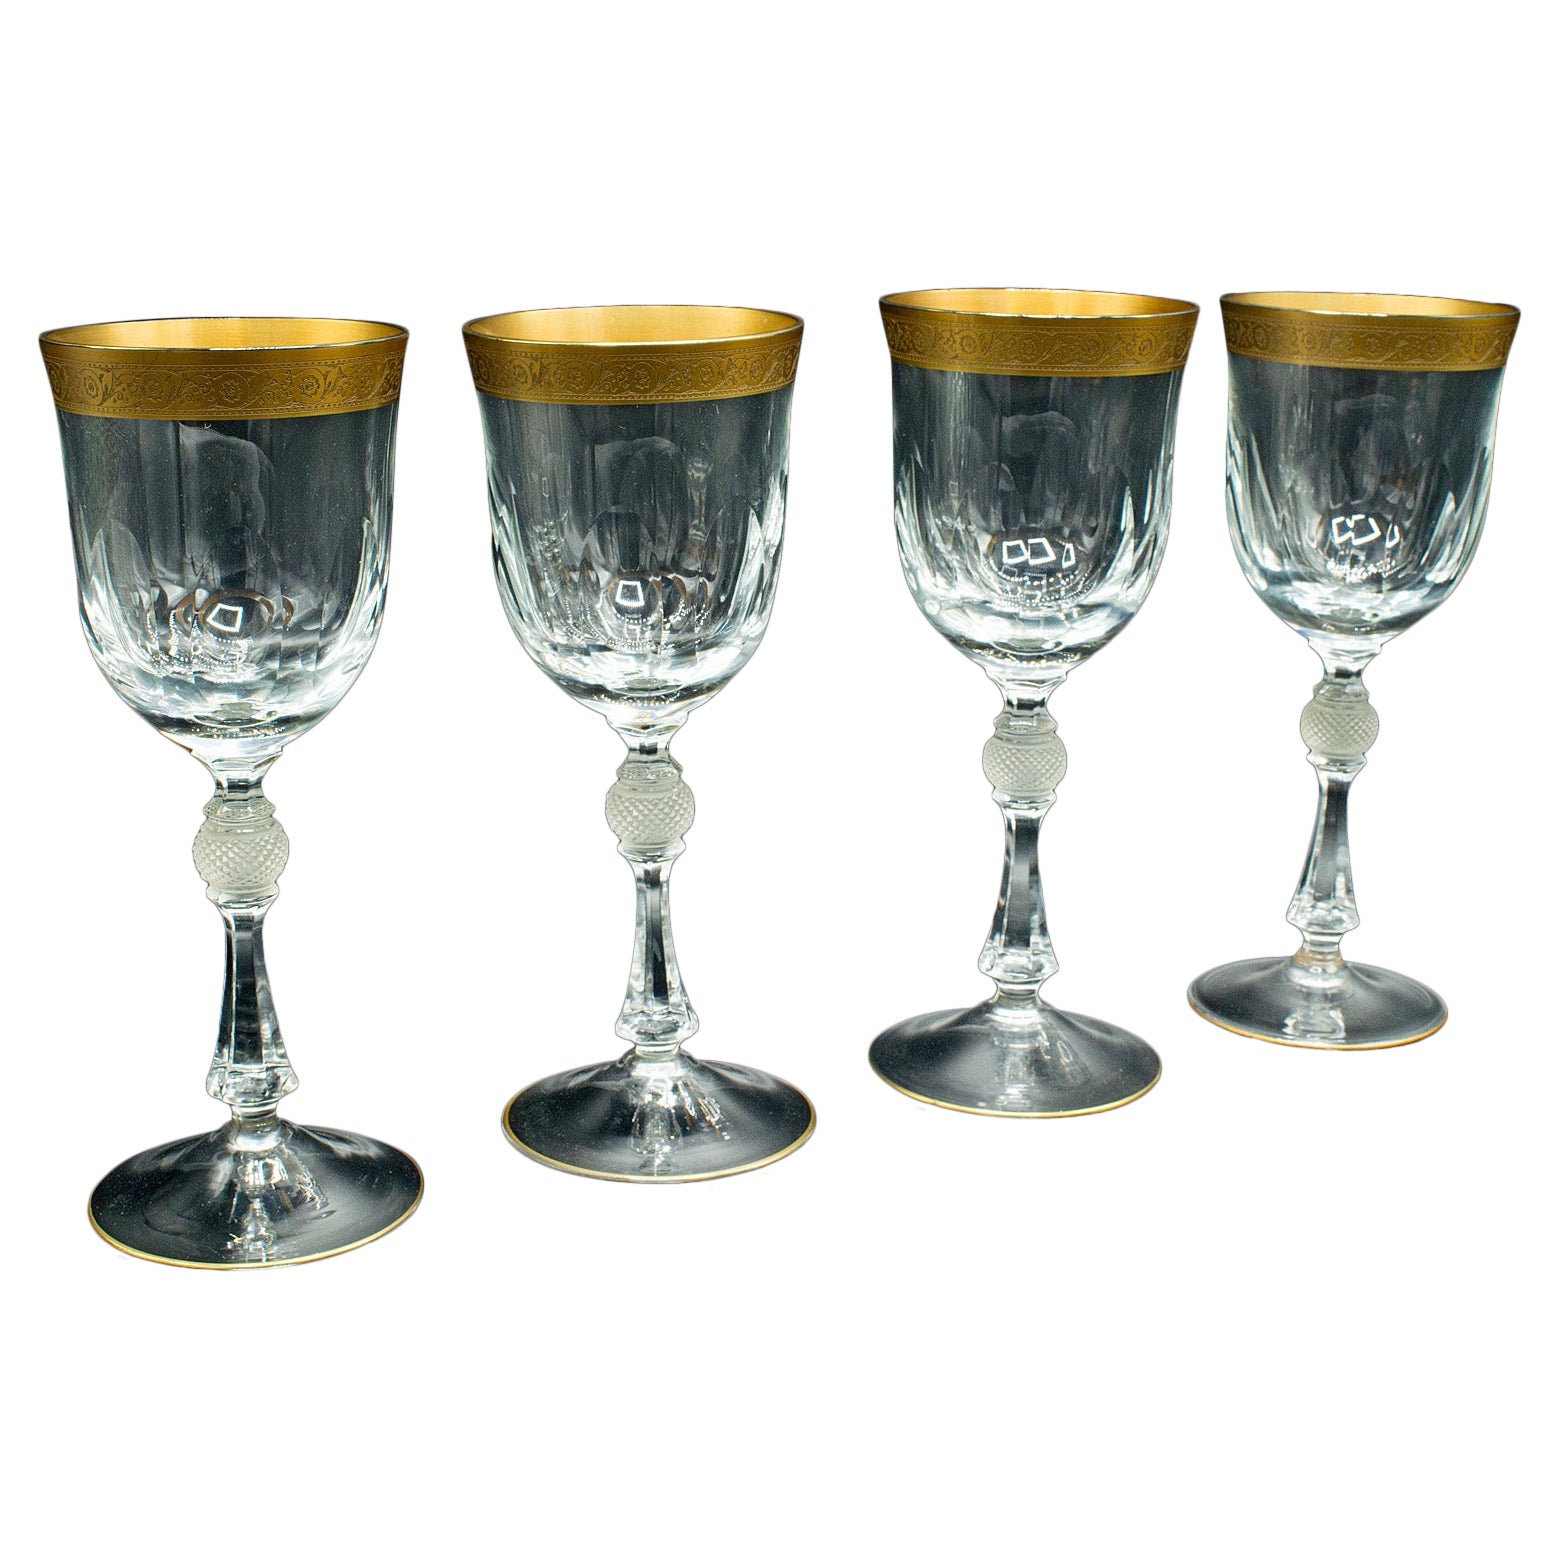 Set of 4 Antique Wine Glasses, French, Gilt, Decorative, Stem Glass, Art Deco For Sale